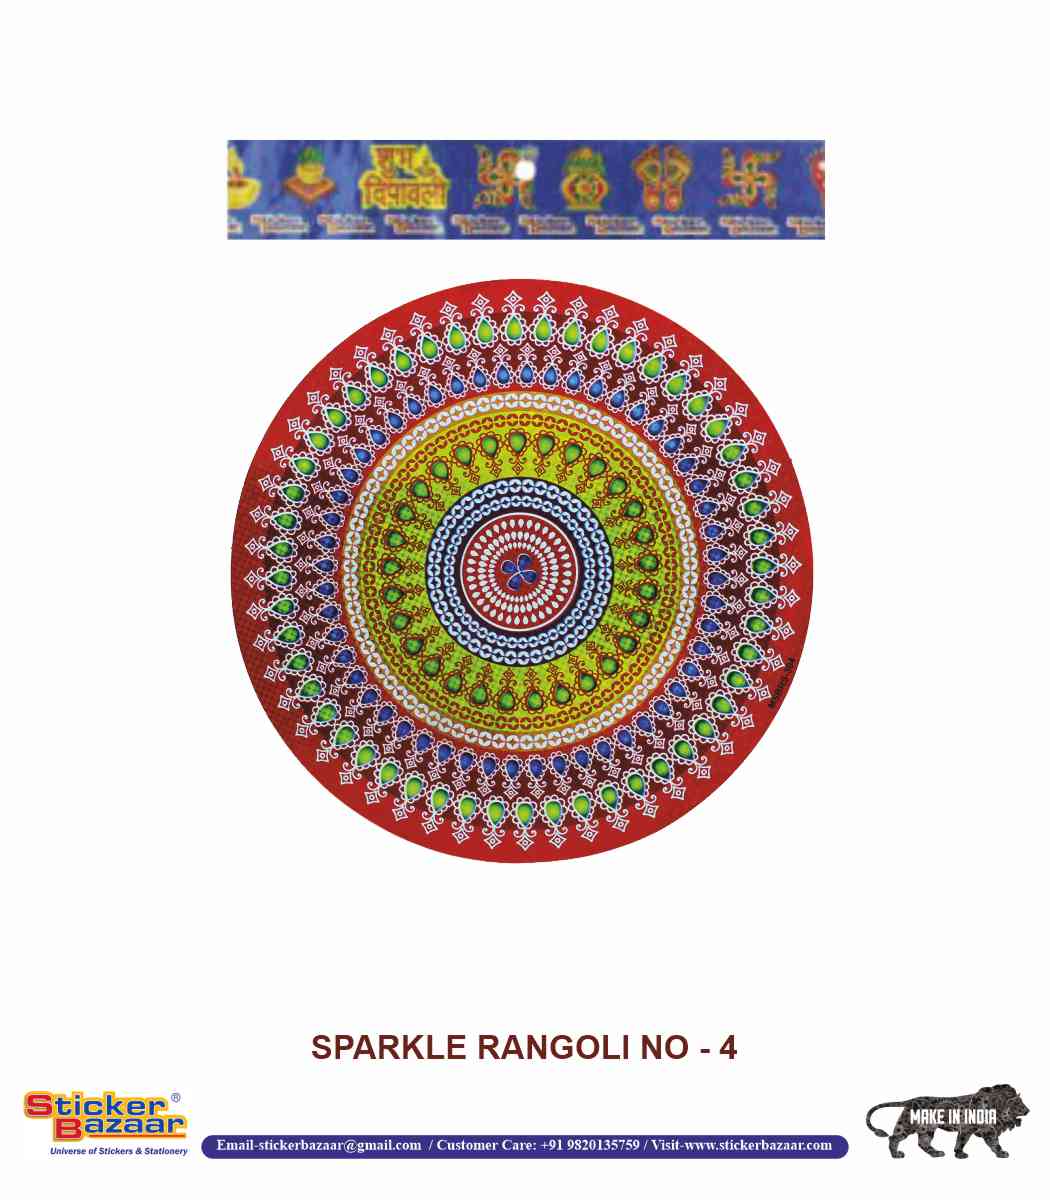 Sticker Bazaar Holo Rangoli SR4 with Header